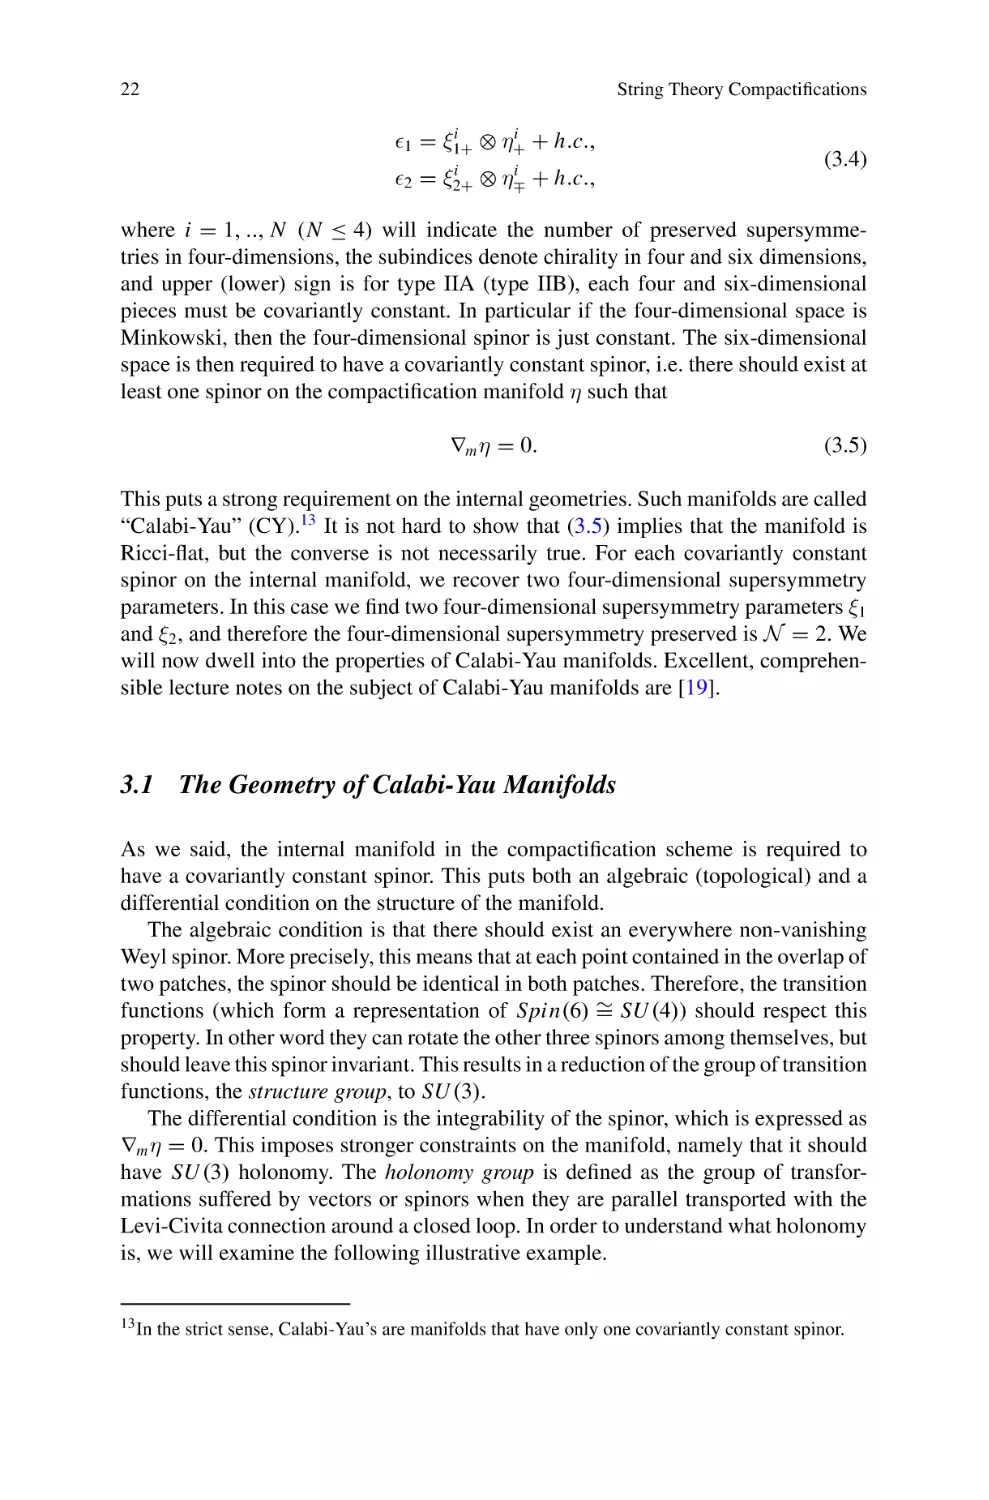 3.1 The Geometry of Calabi-Yau Manifolds